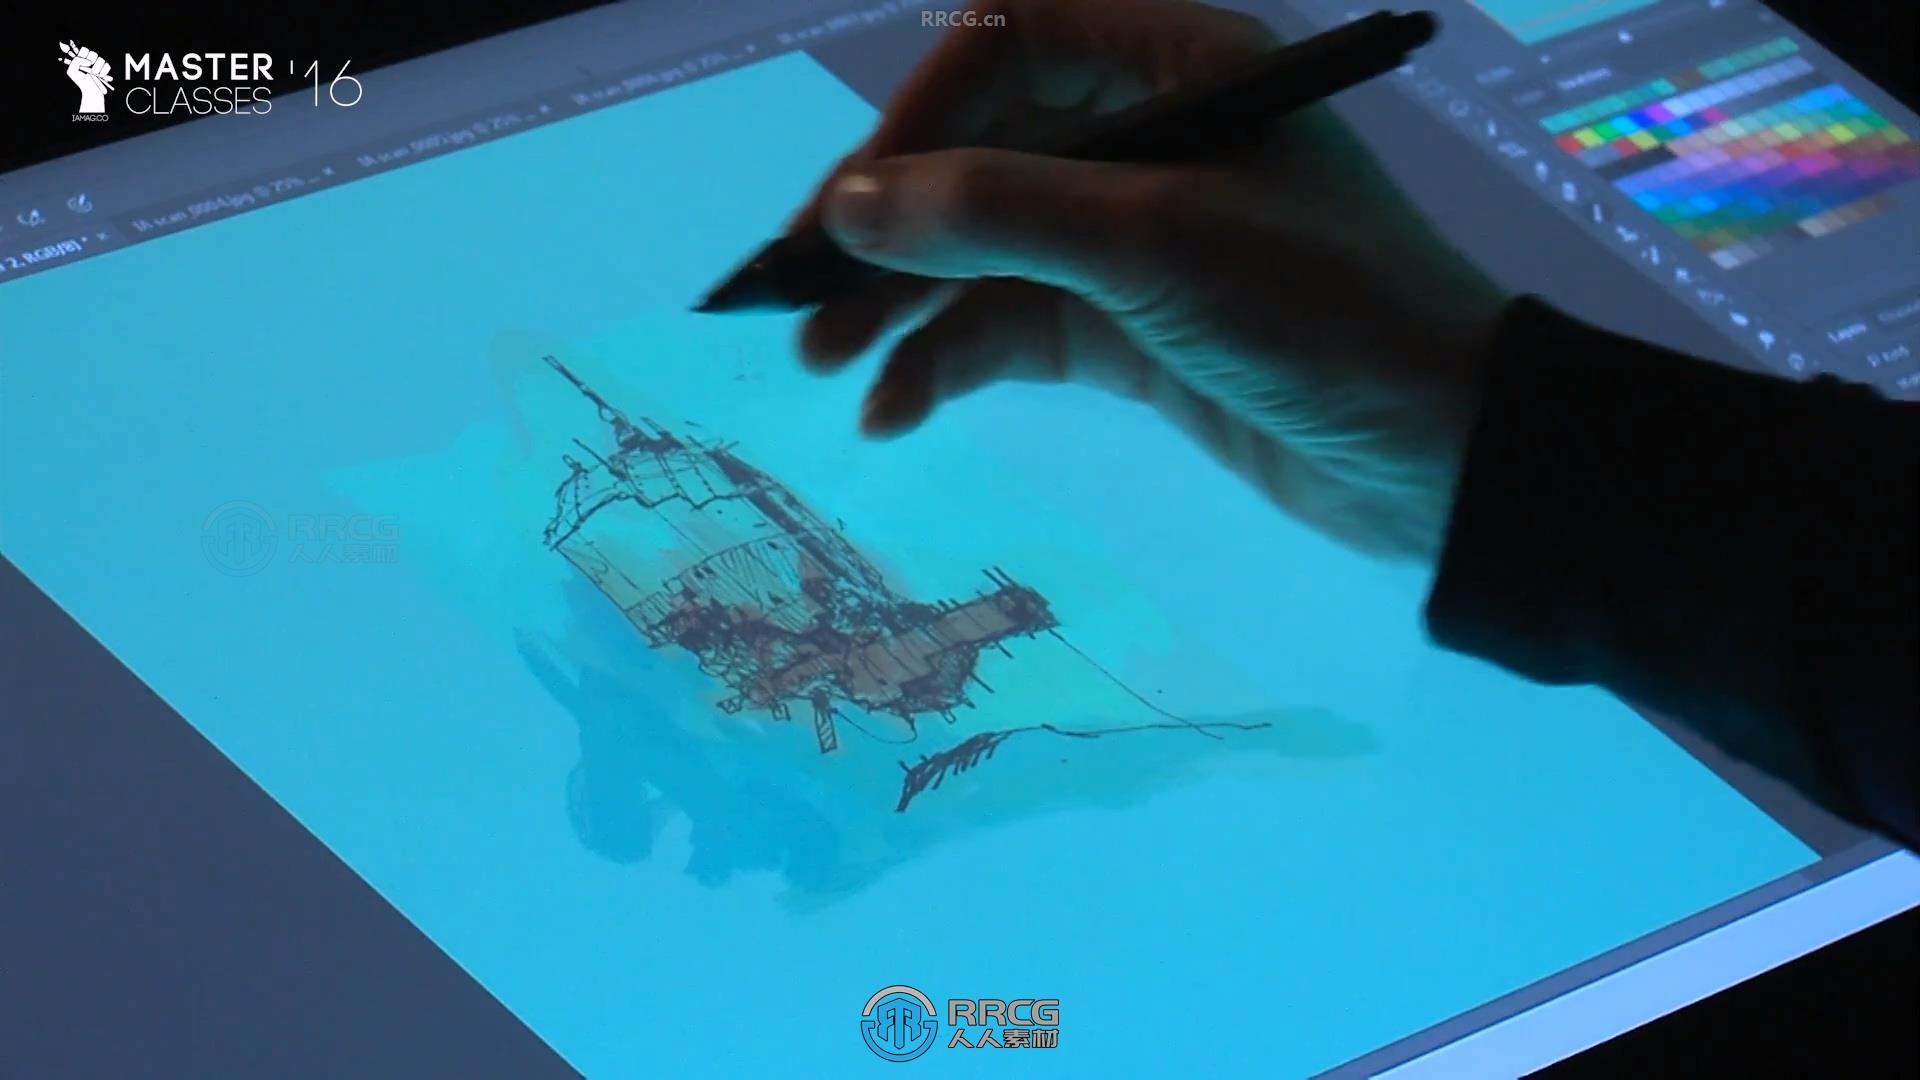 Ian Mcque画师概念艺术环境飞船数字绘画视频教程